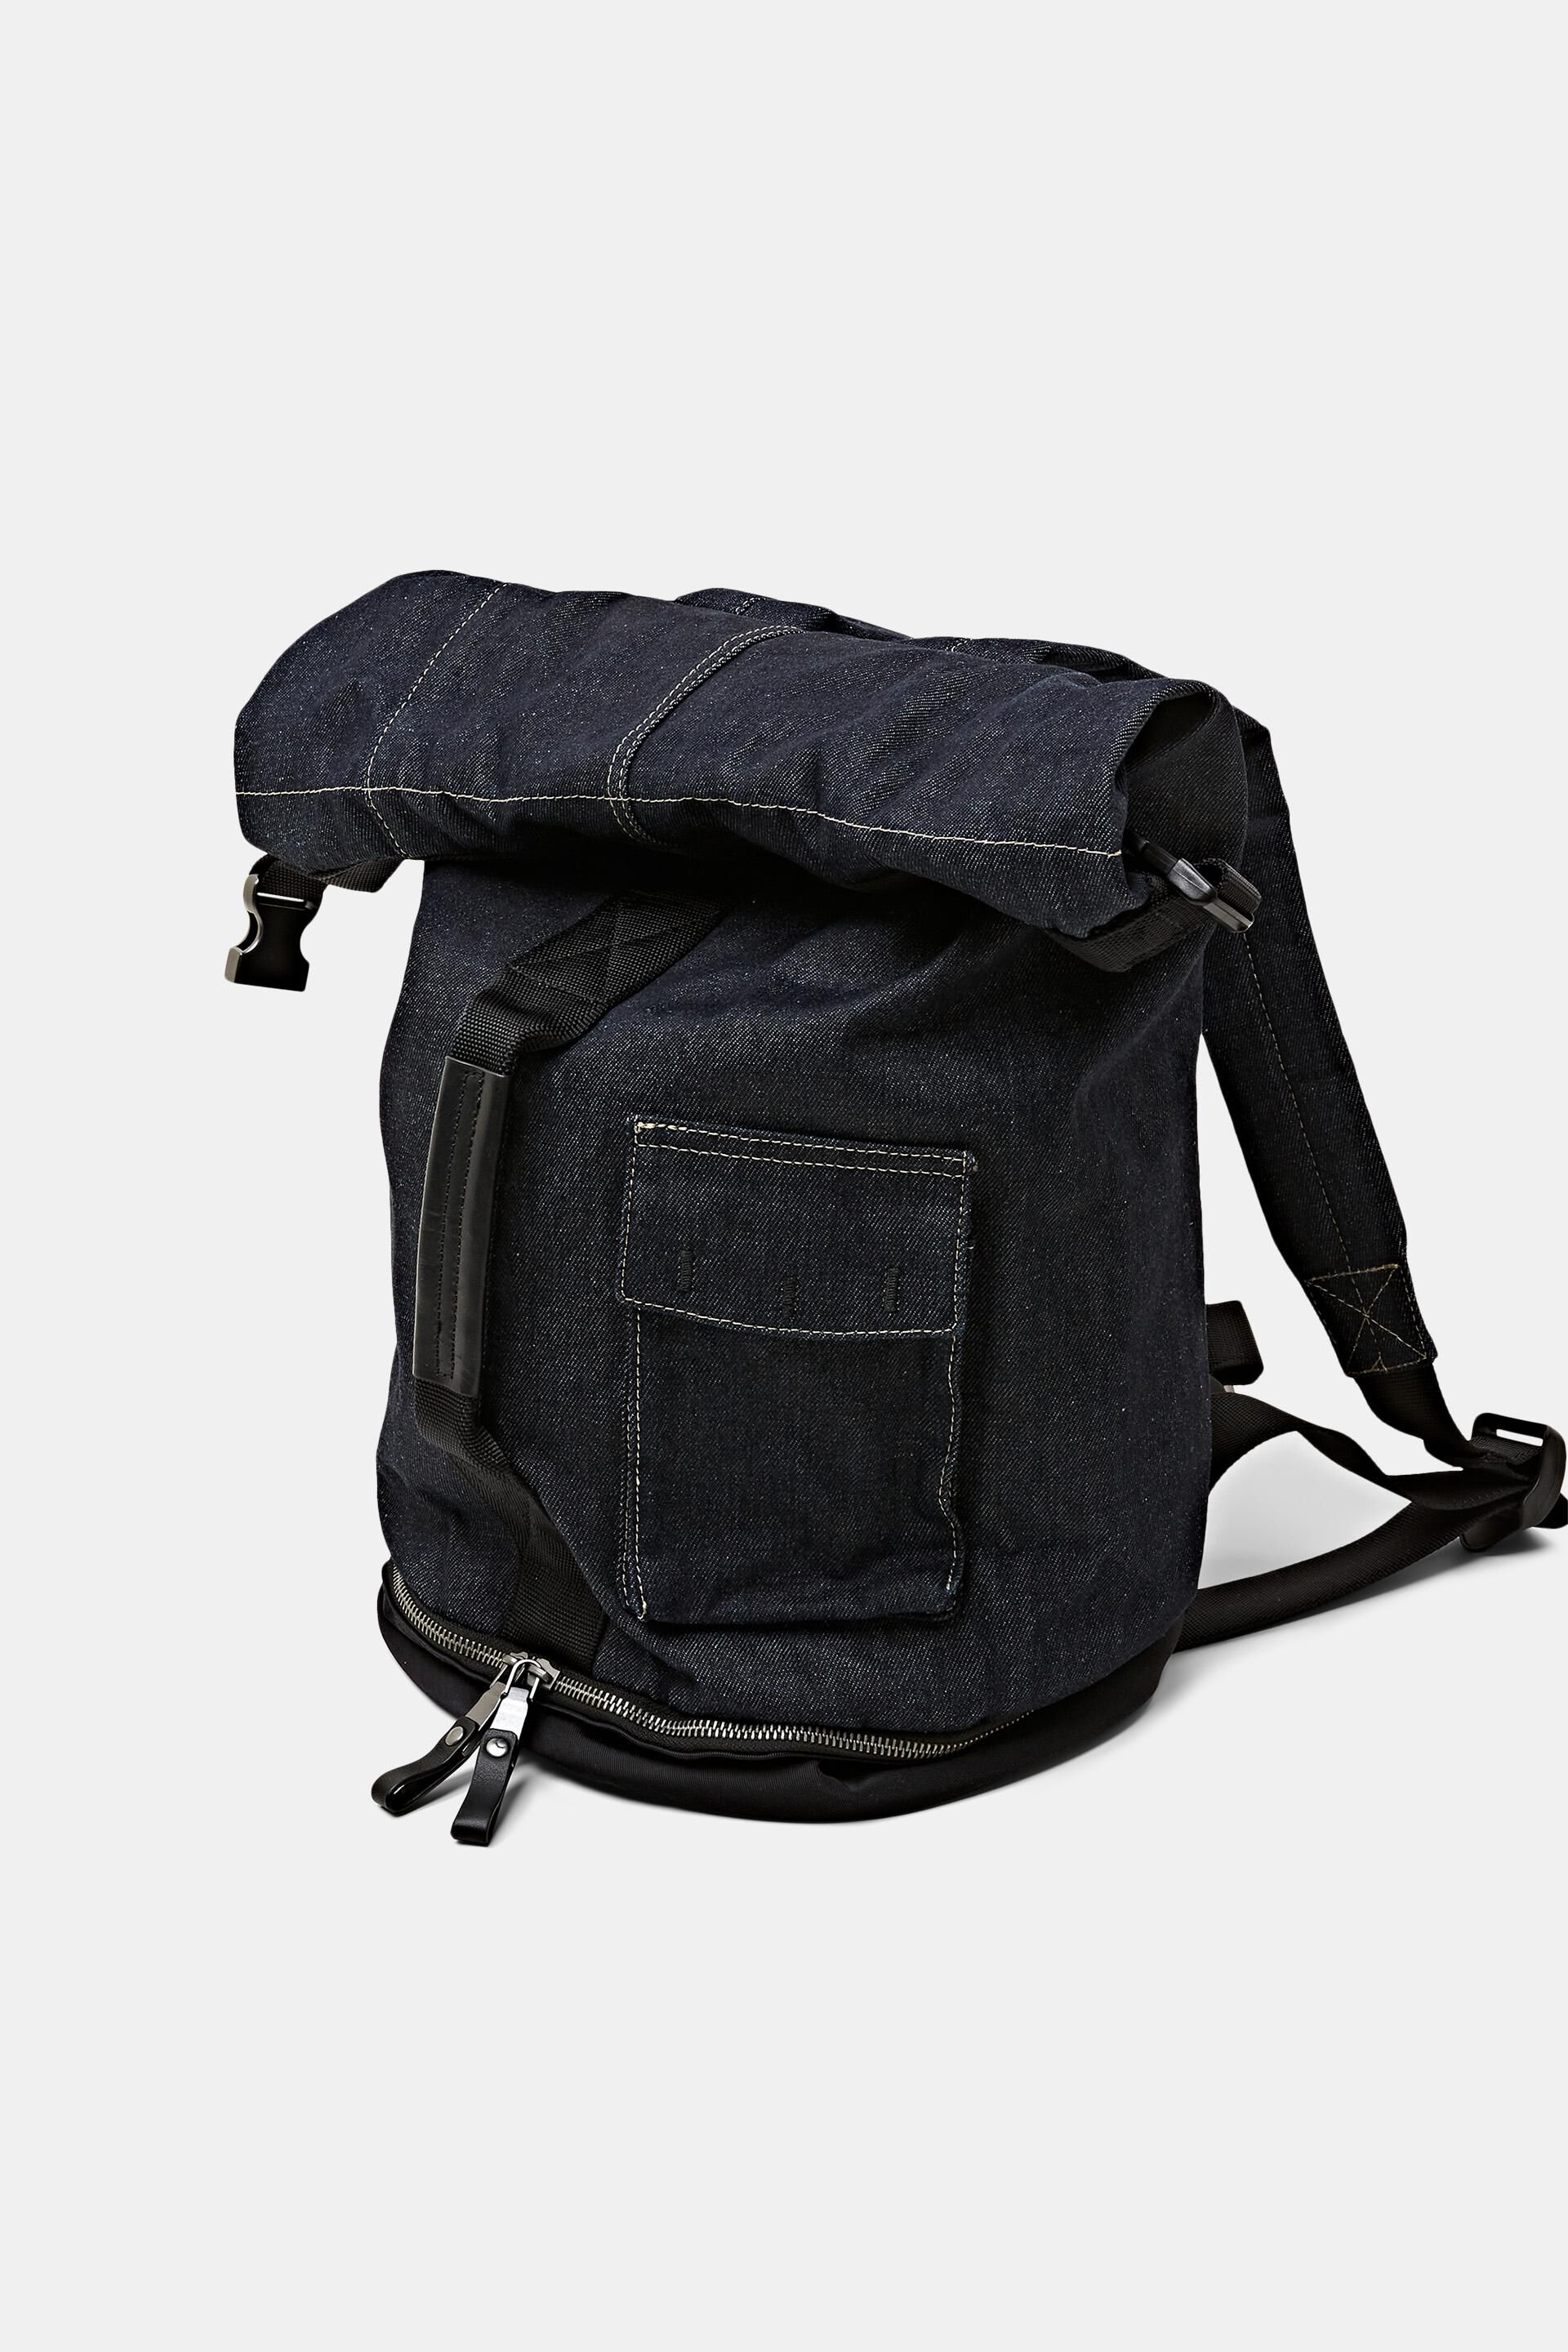 Bari Lynn Tie Dye Denim Black Backpack - Everafter – everafter